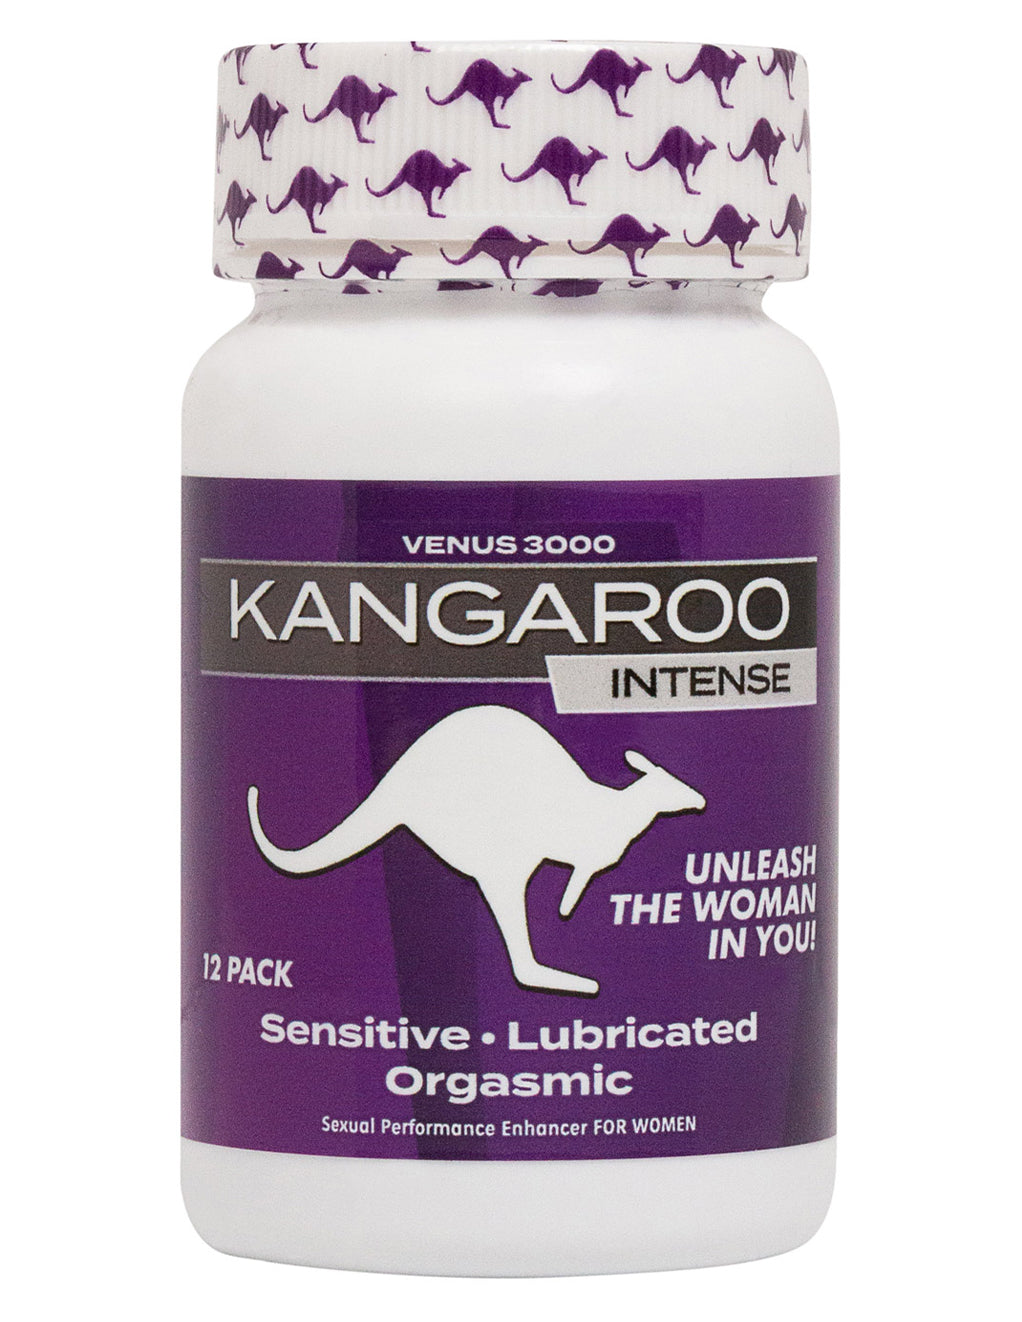 Kangaroo Violet Venus 3000 Personal Care at Hustler Hollywood